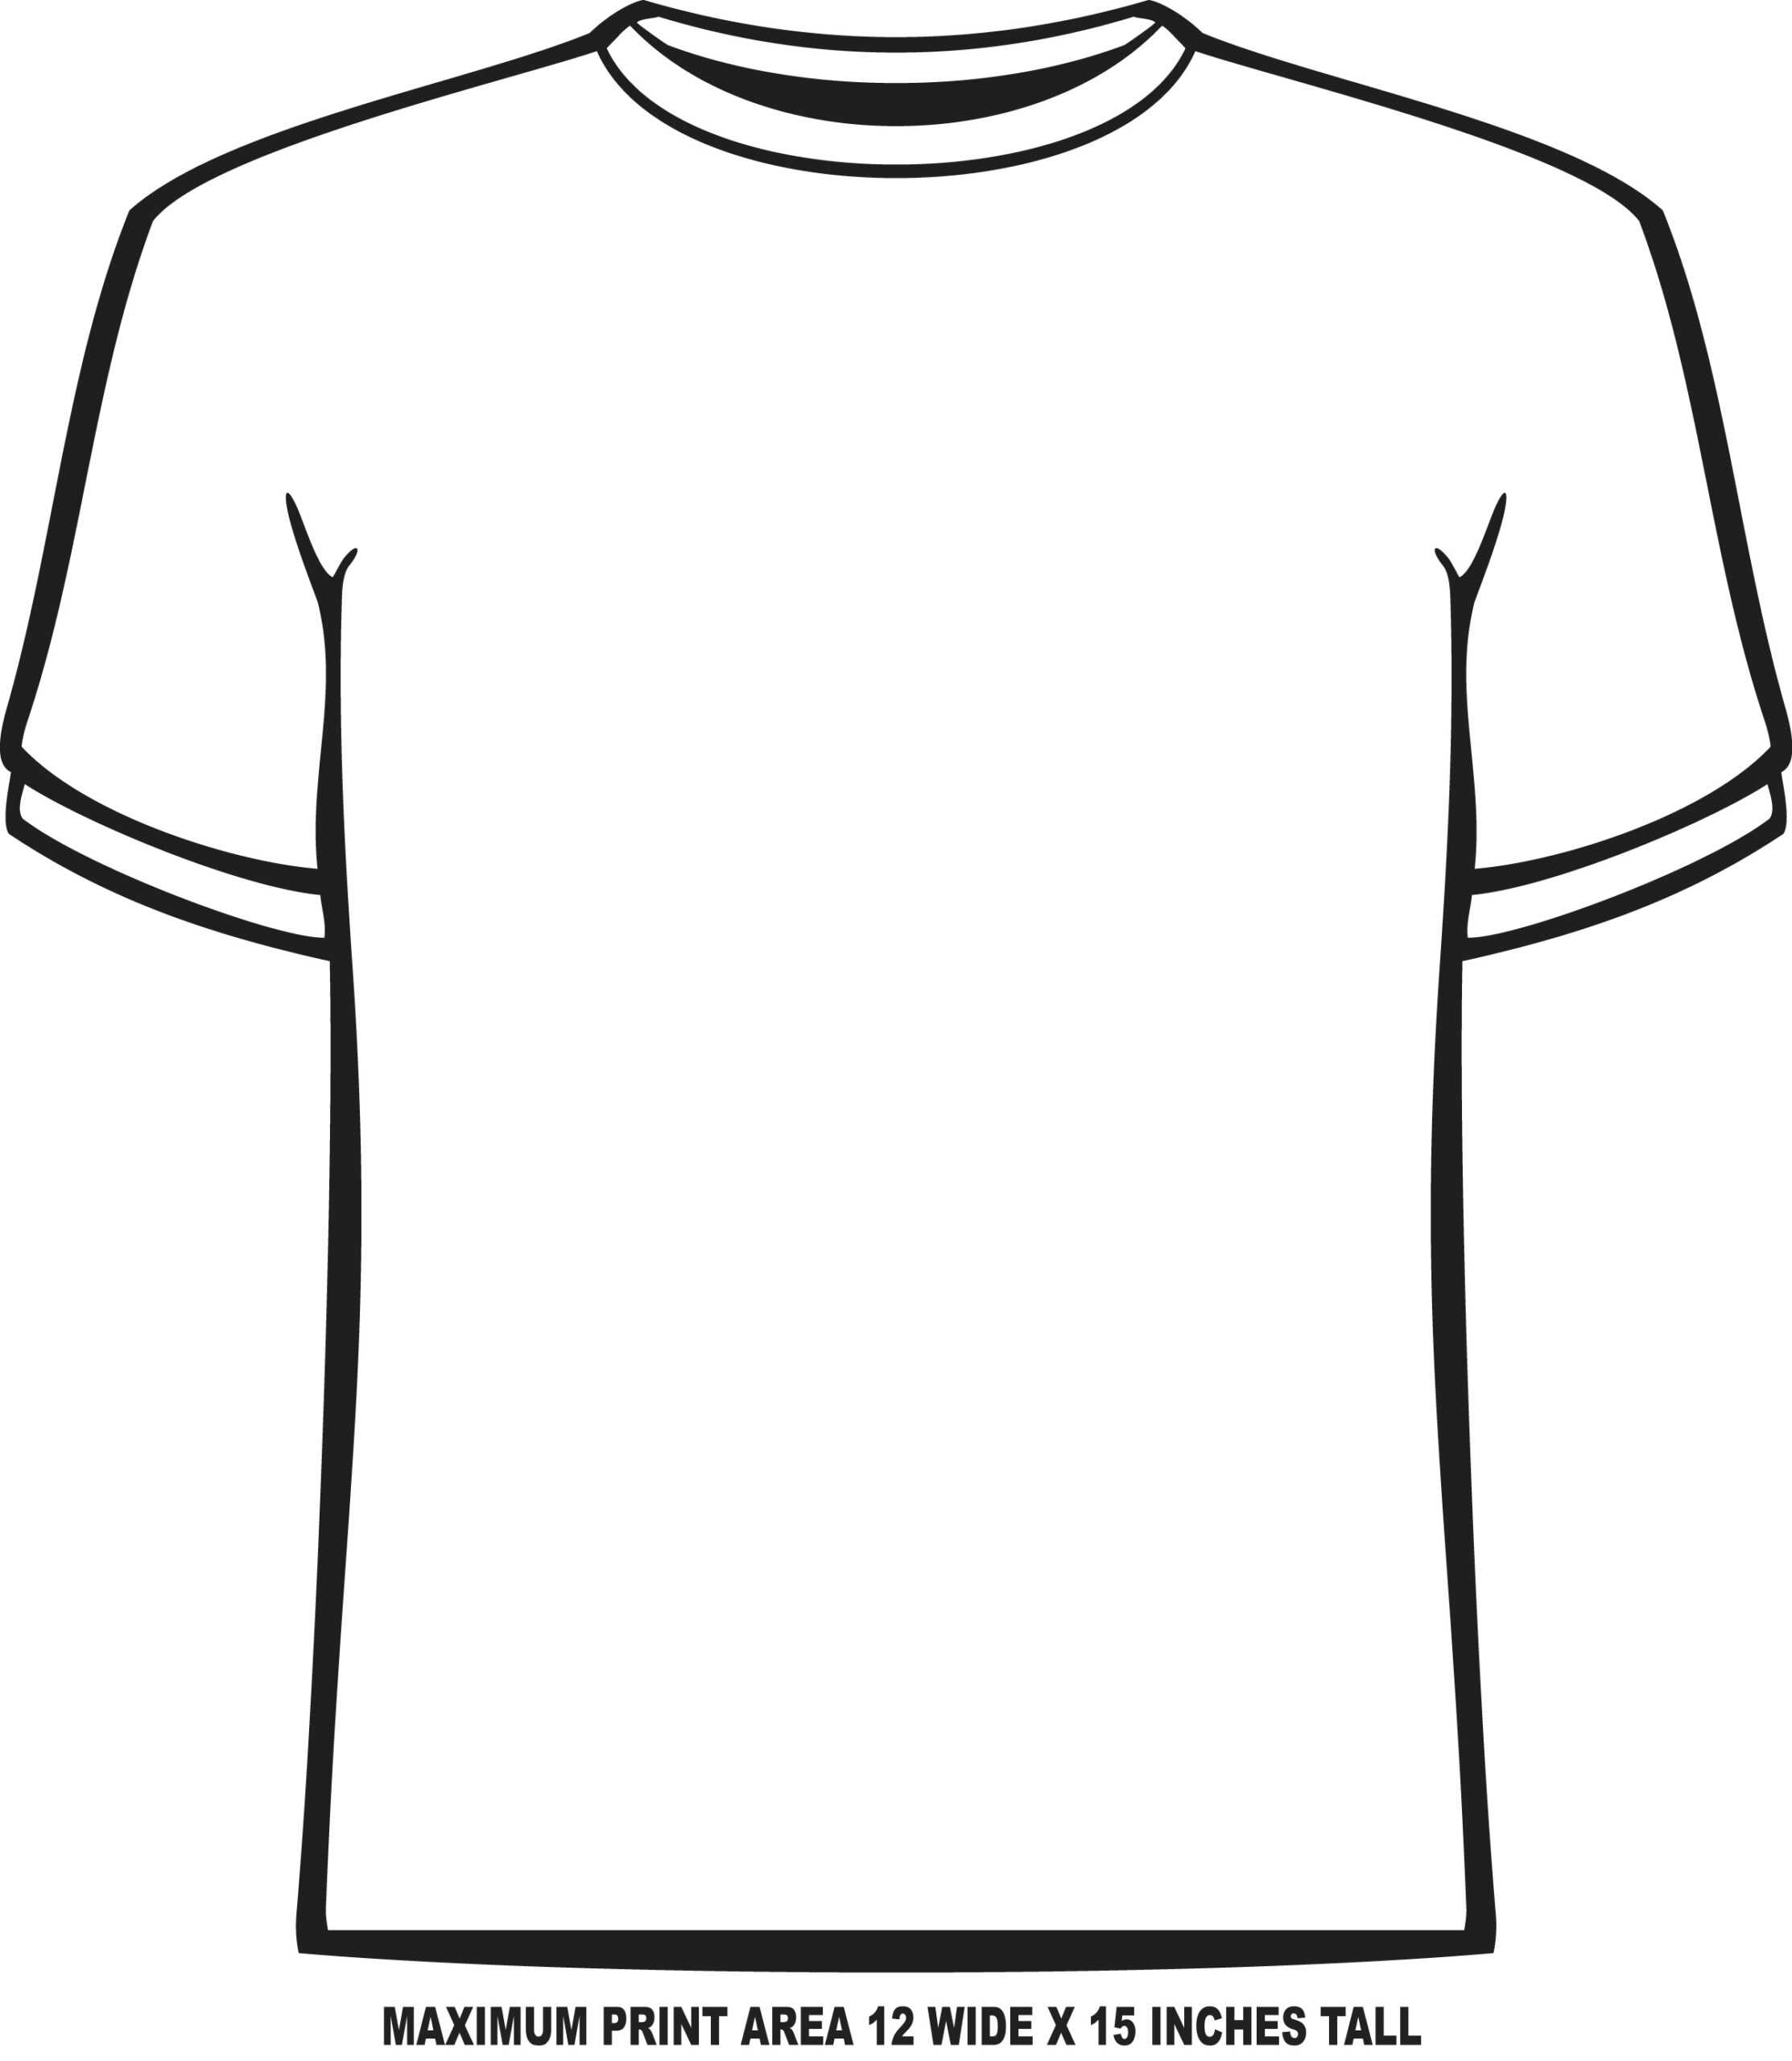 Blank Tshirt Template Pdf - Dreamworks Within Blank Tshirt Template Pdf